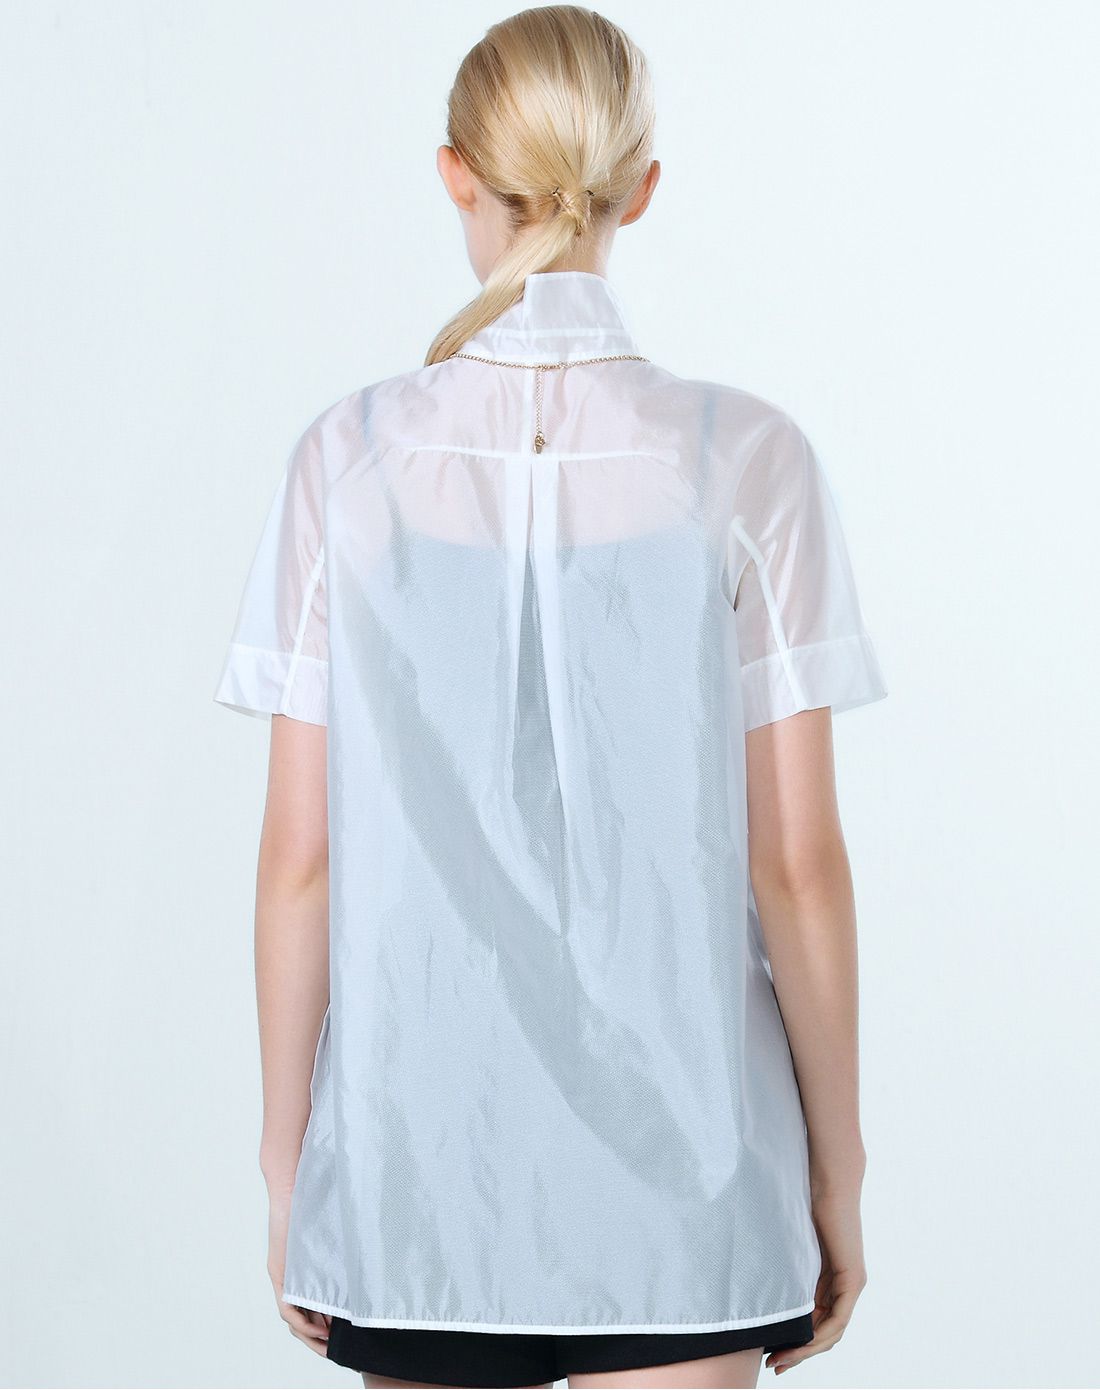 bblluuee粉蓝衣橱女装白色休闲优雅半透明衬衣651c02810